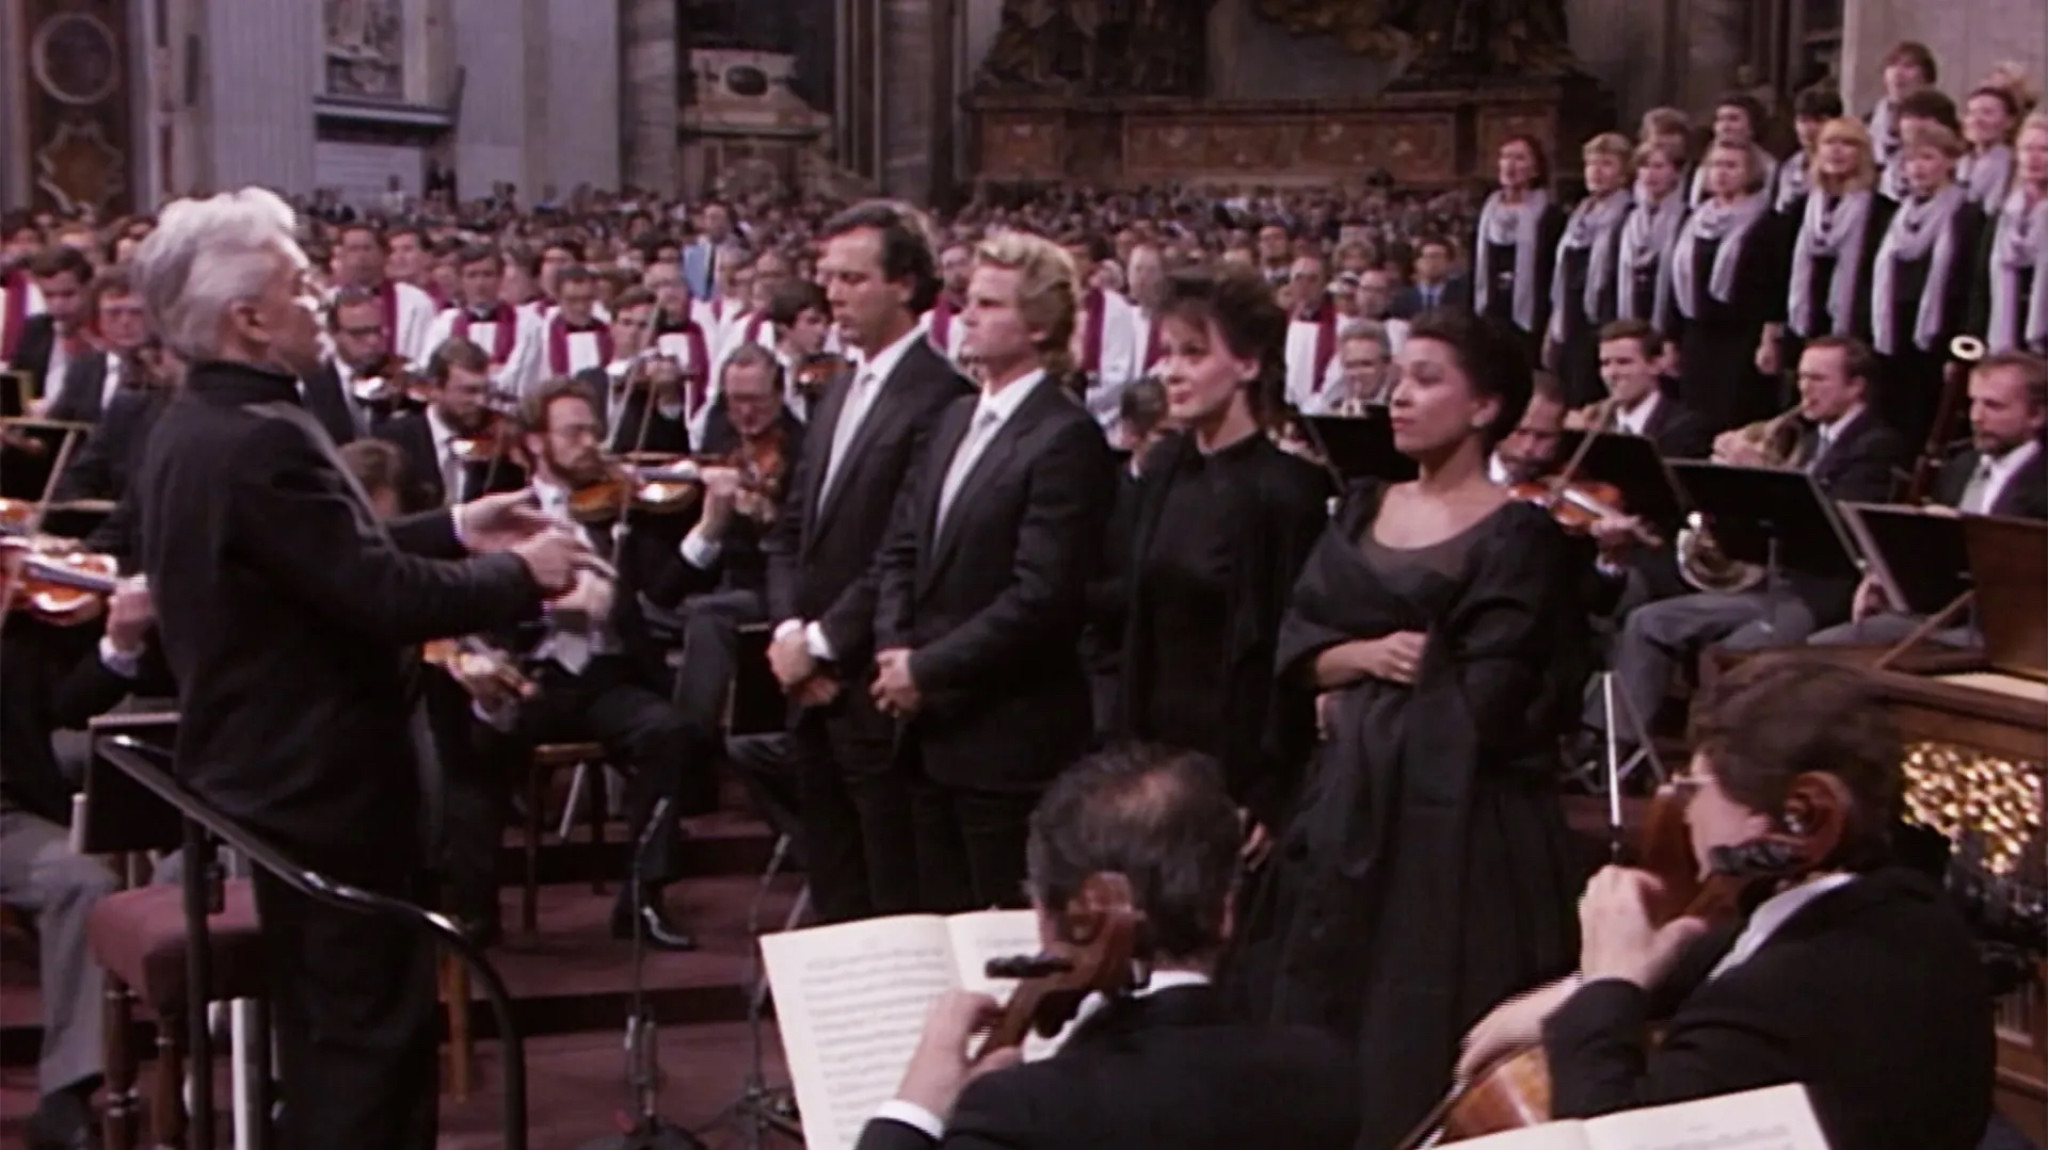 Karajan at the Vatican: Mozart "Coronation" Mass & Ave verum corpus